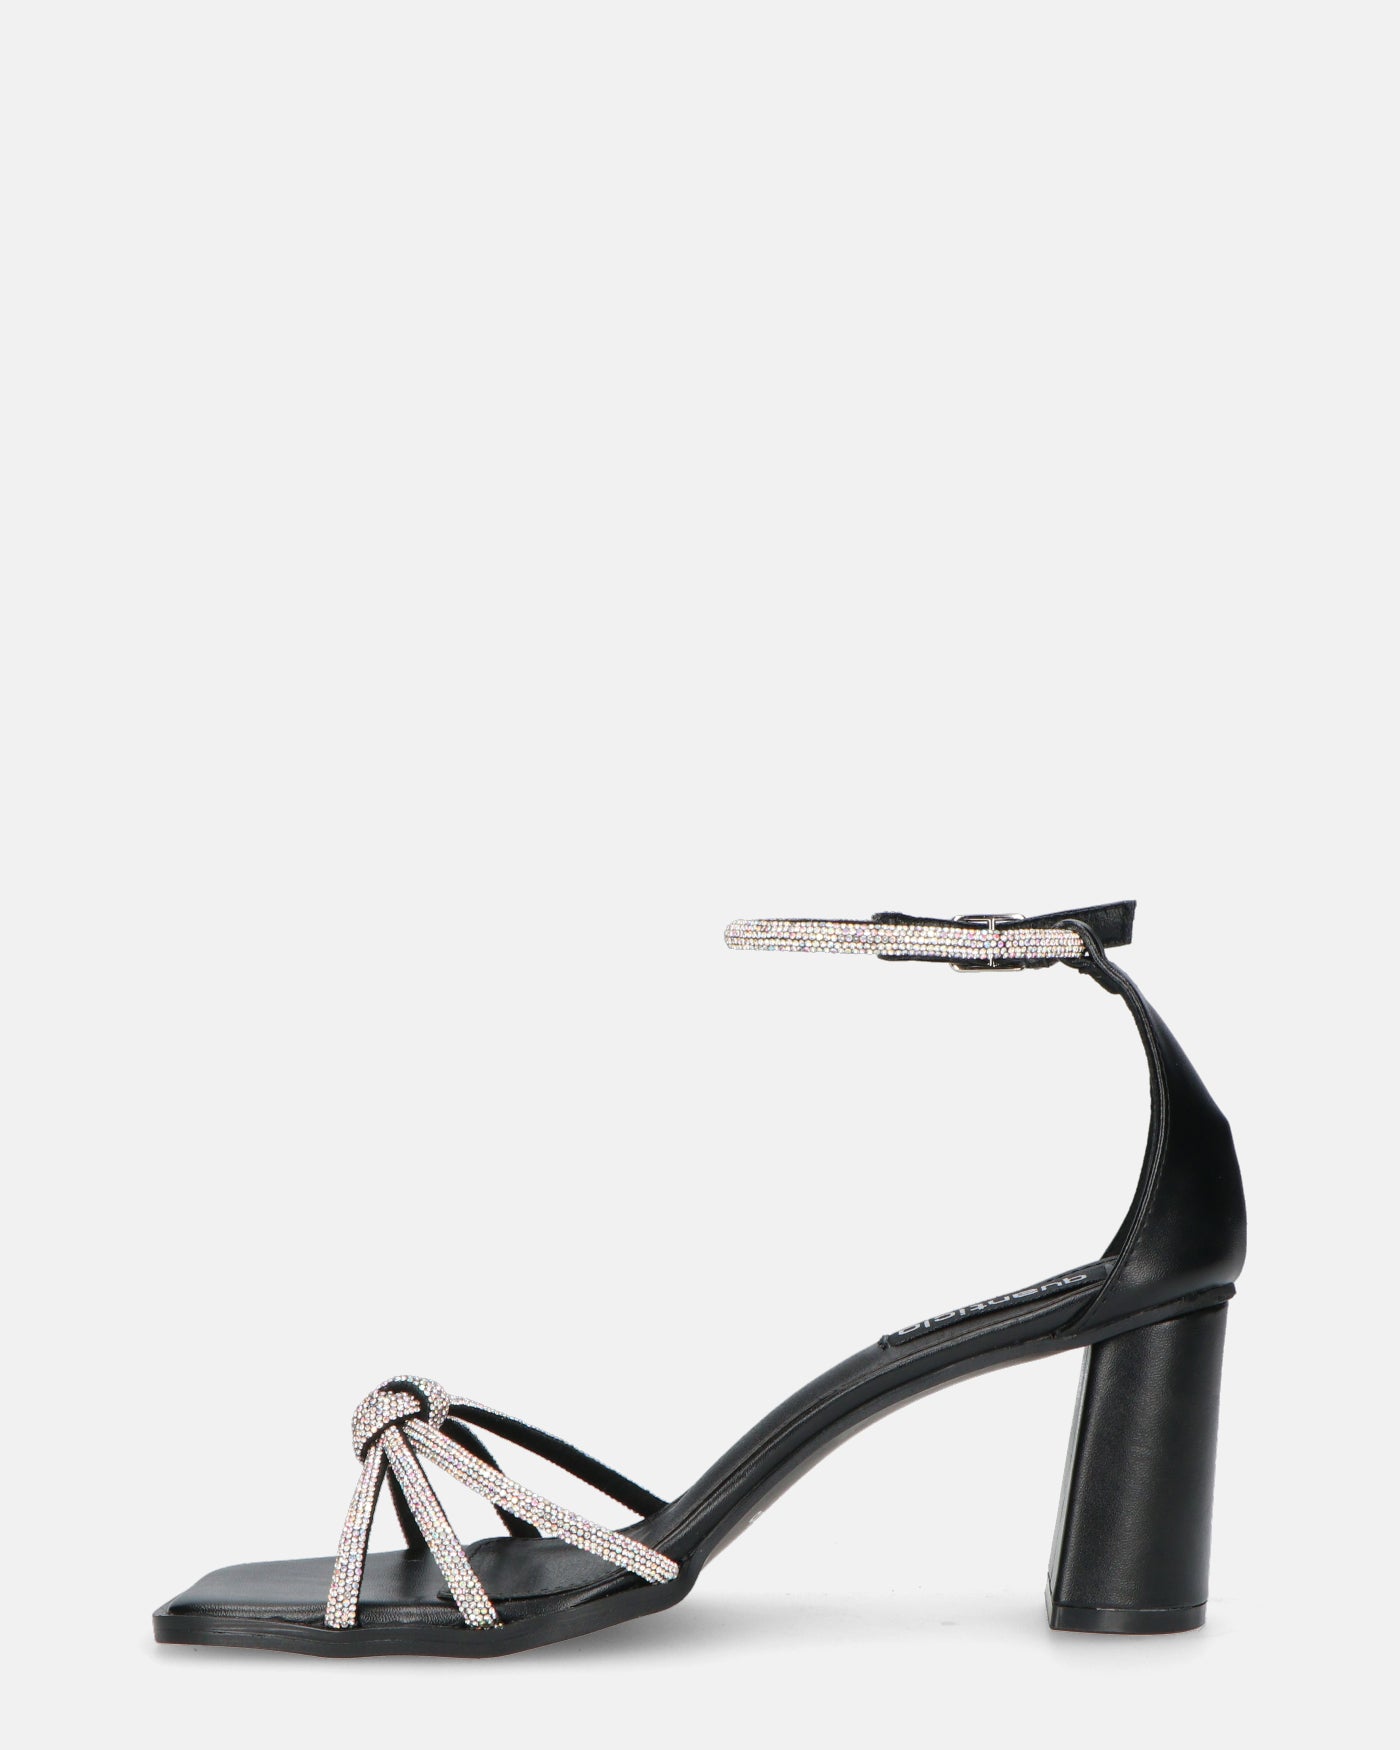 NORI - black heeled sandals with strap